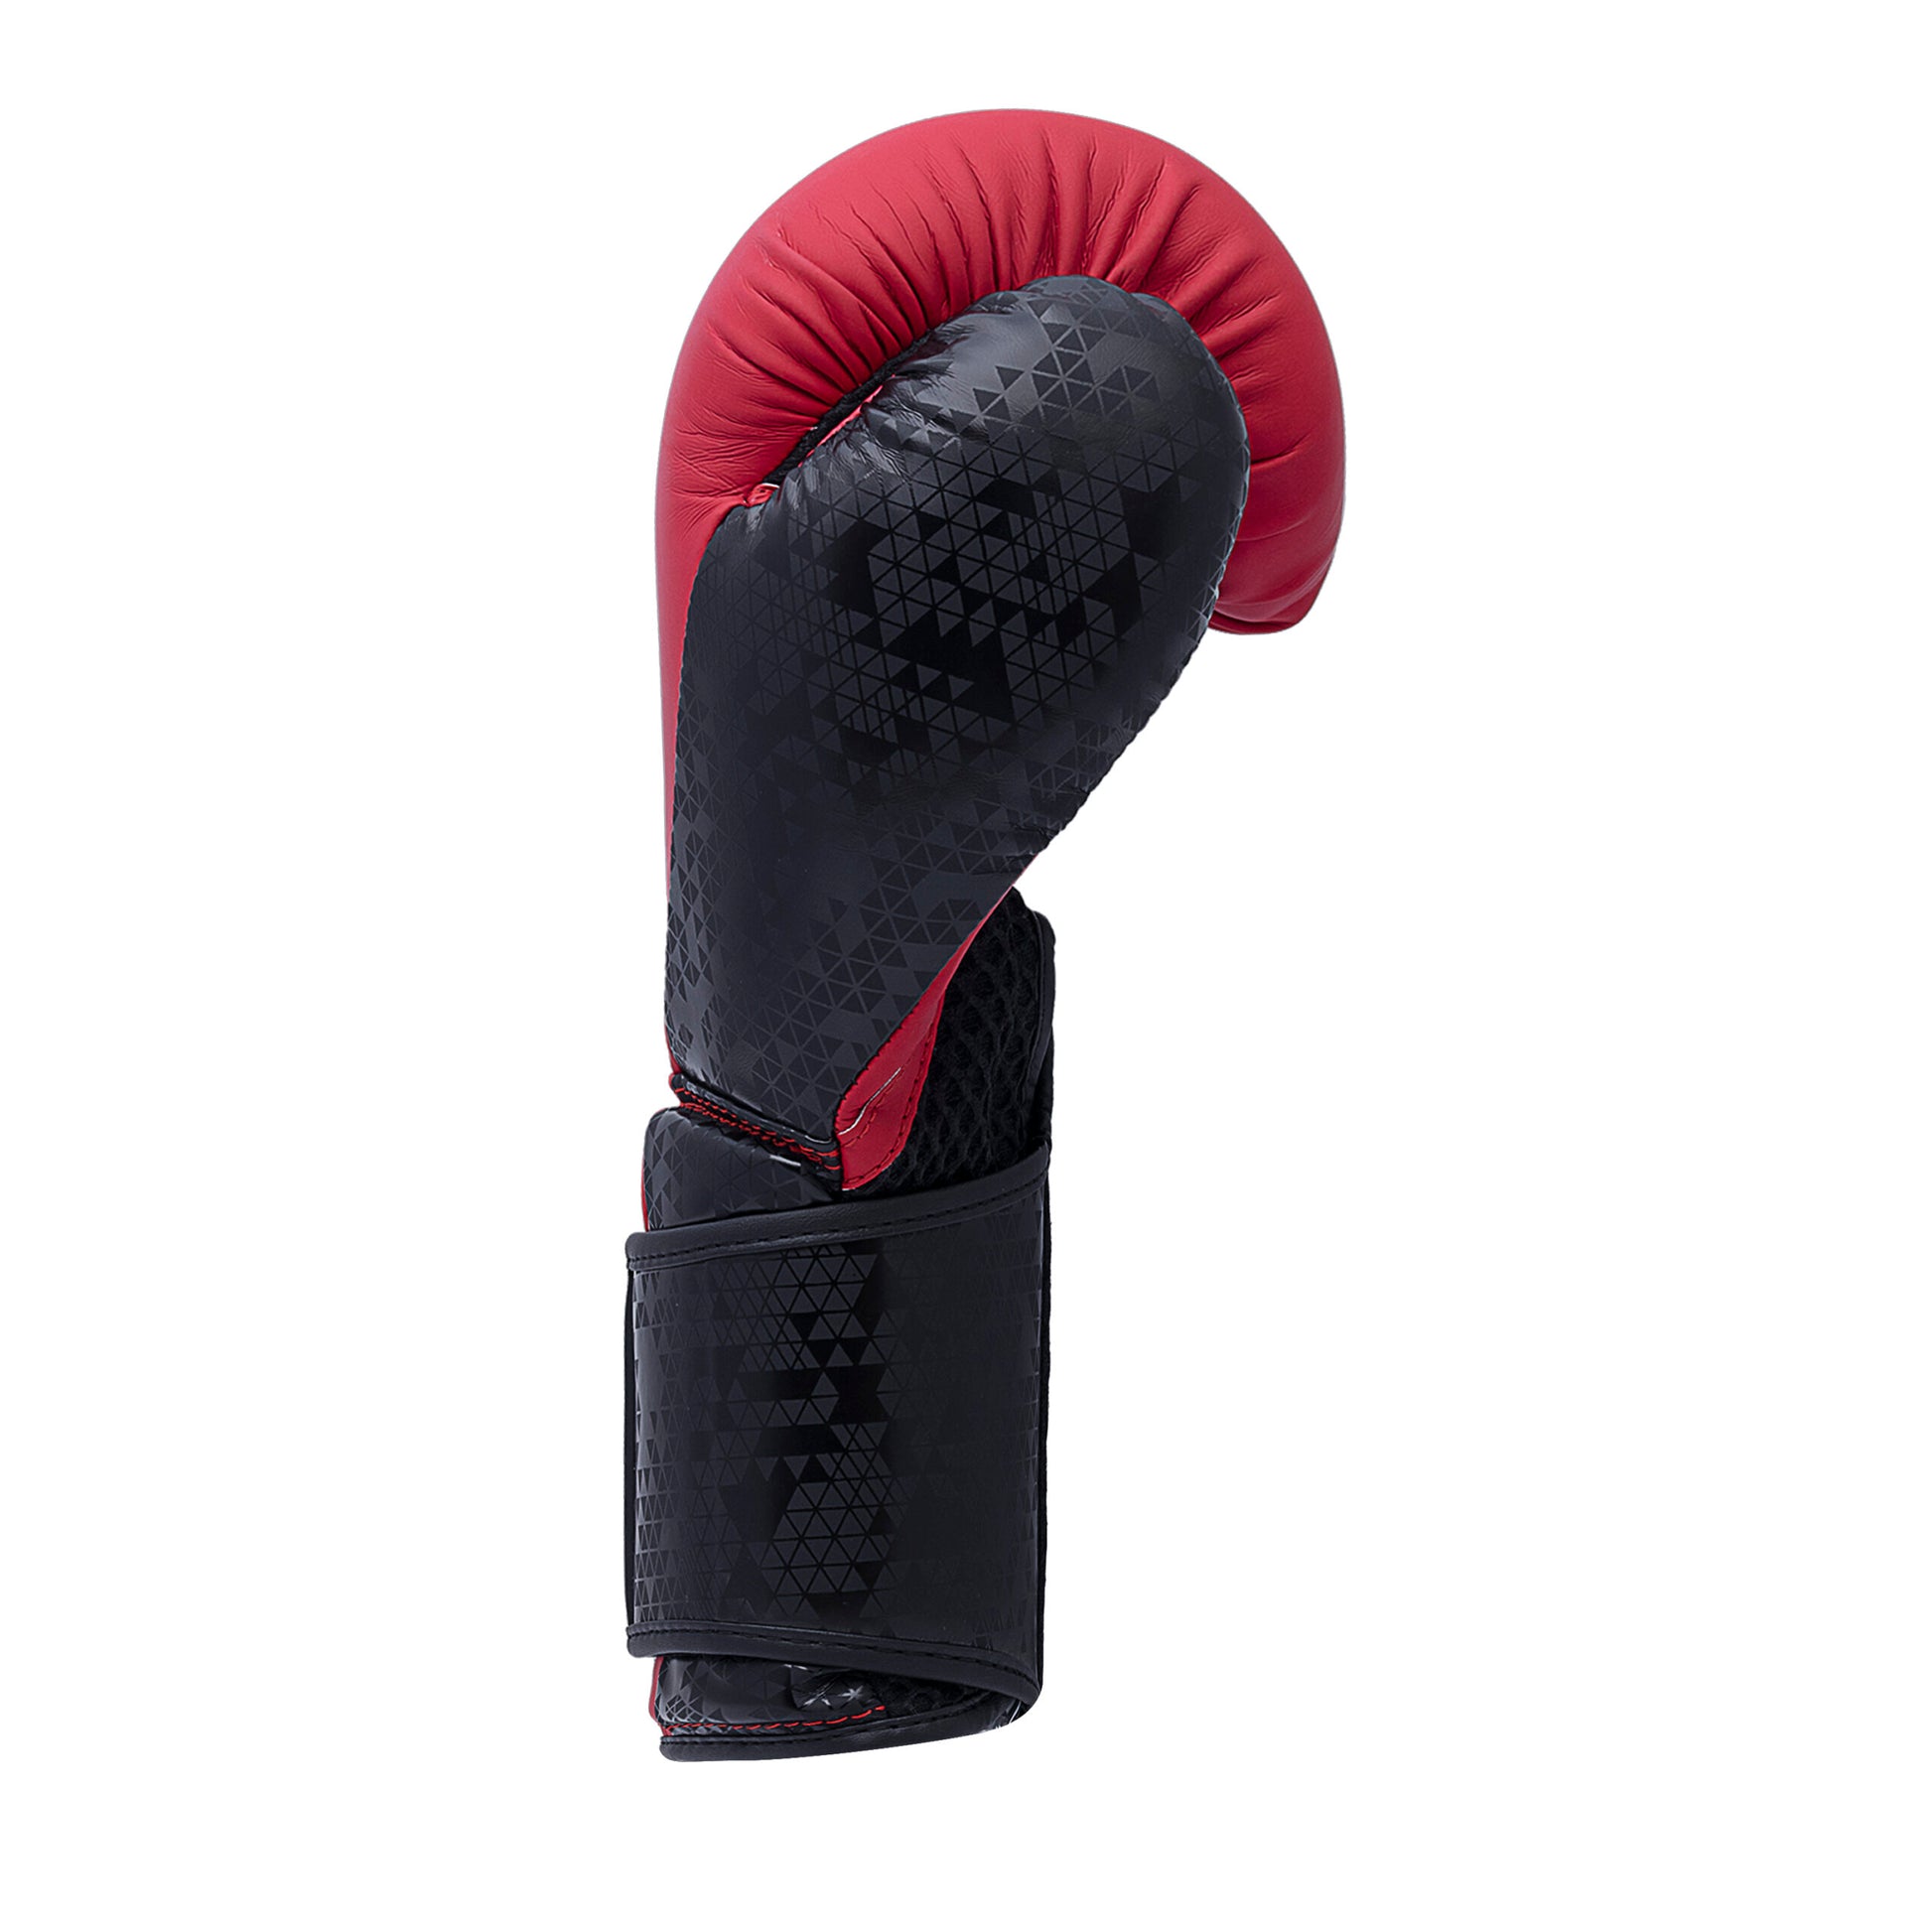 Adic50tg Combat 50 Training Boxing Gloves Vivid Red Black 02